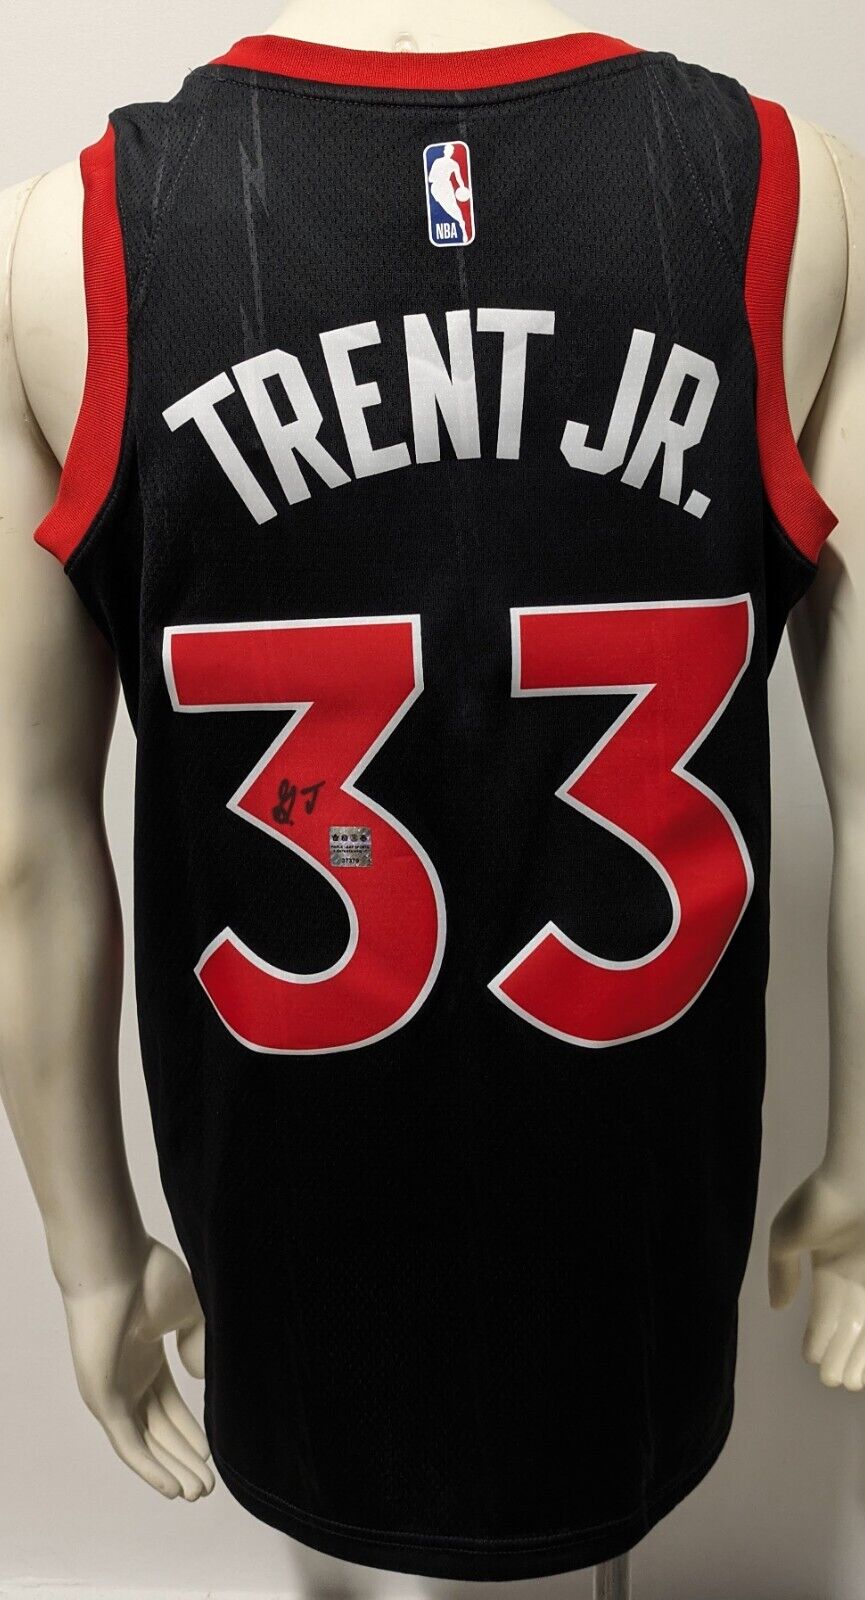 Gary Trent Jr. Autographed Toronto Raptors Basketball Jersey Signed MLSE COA NBA